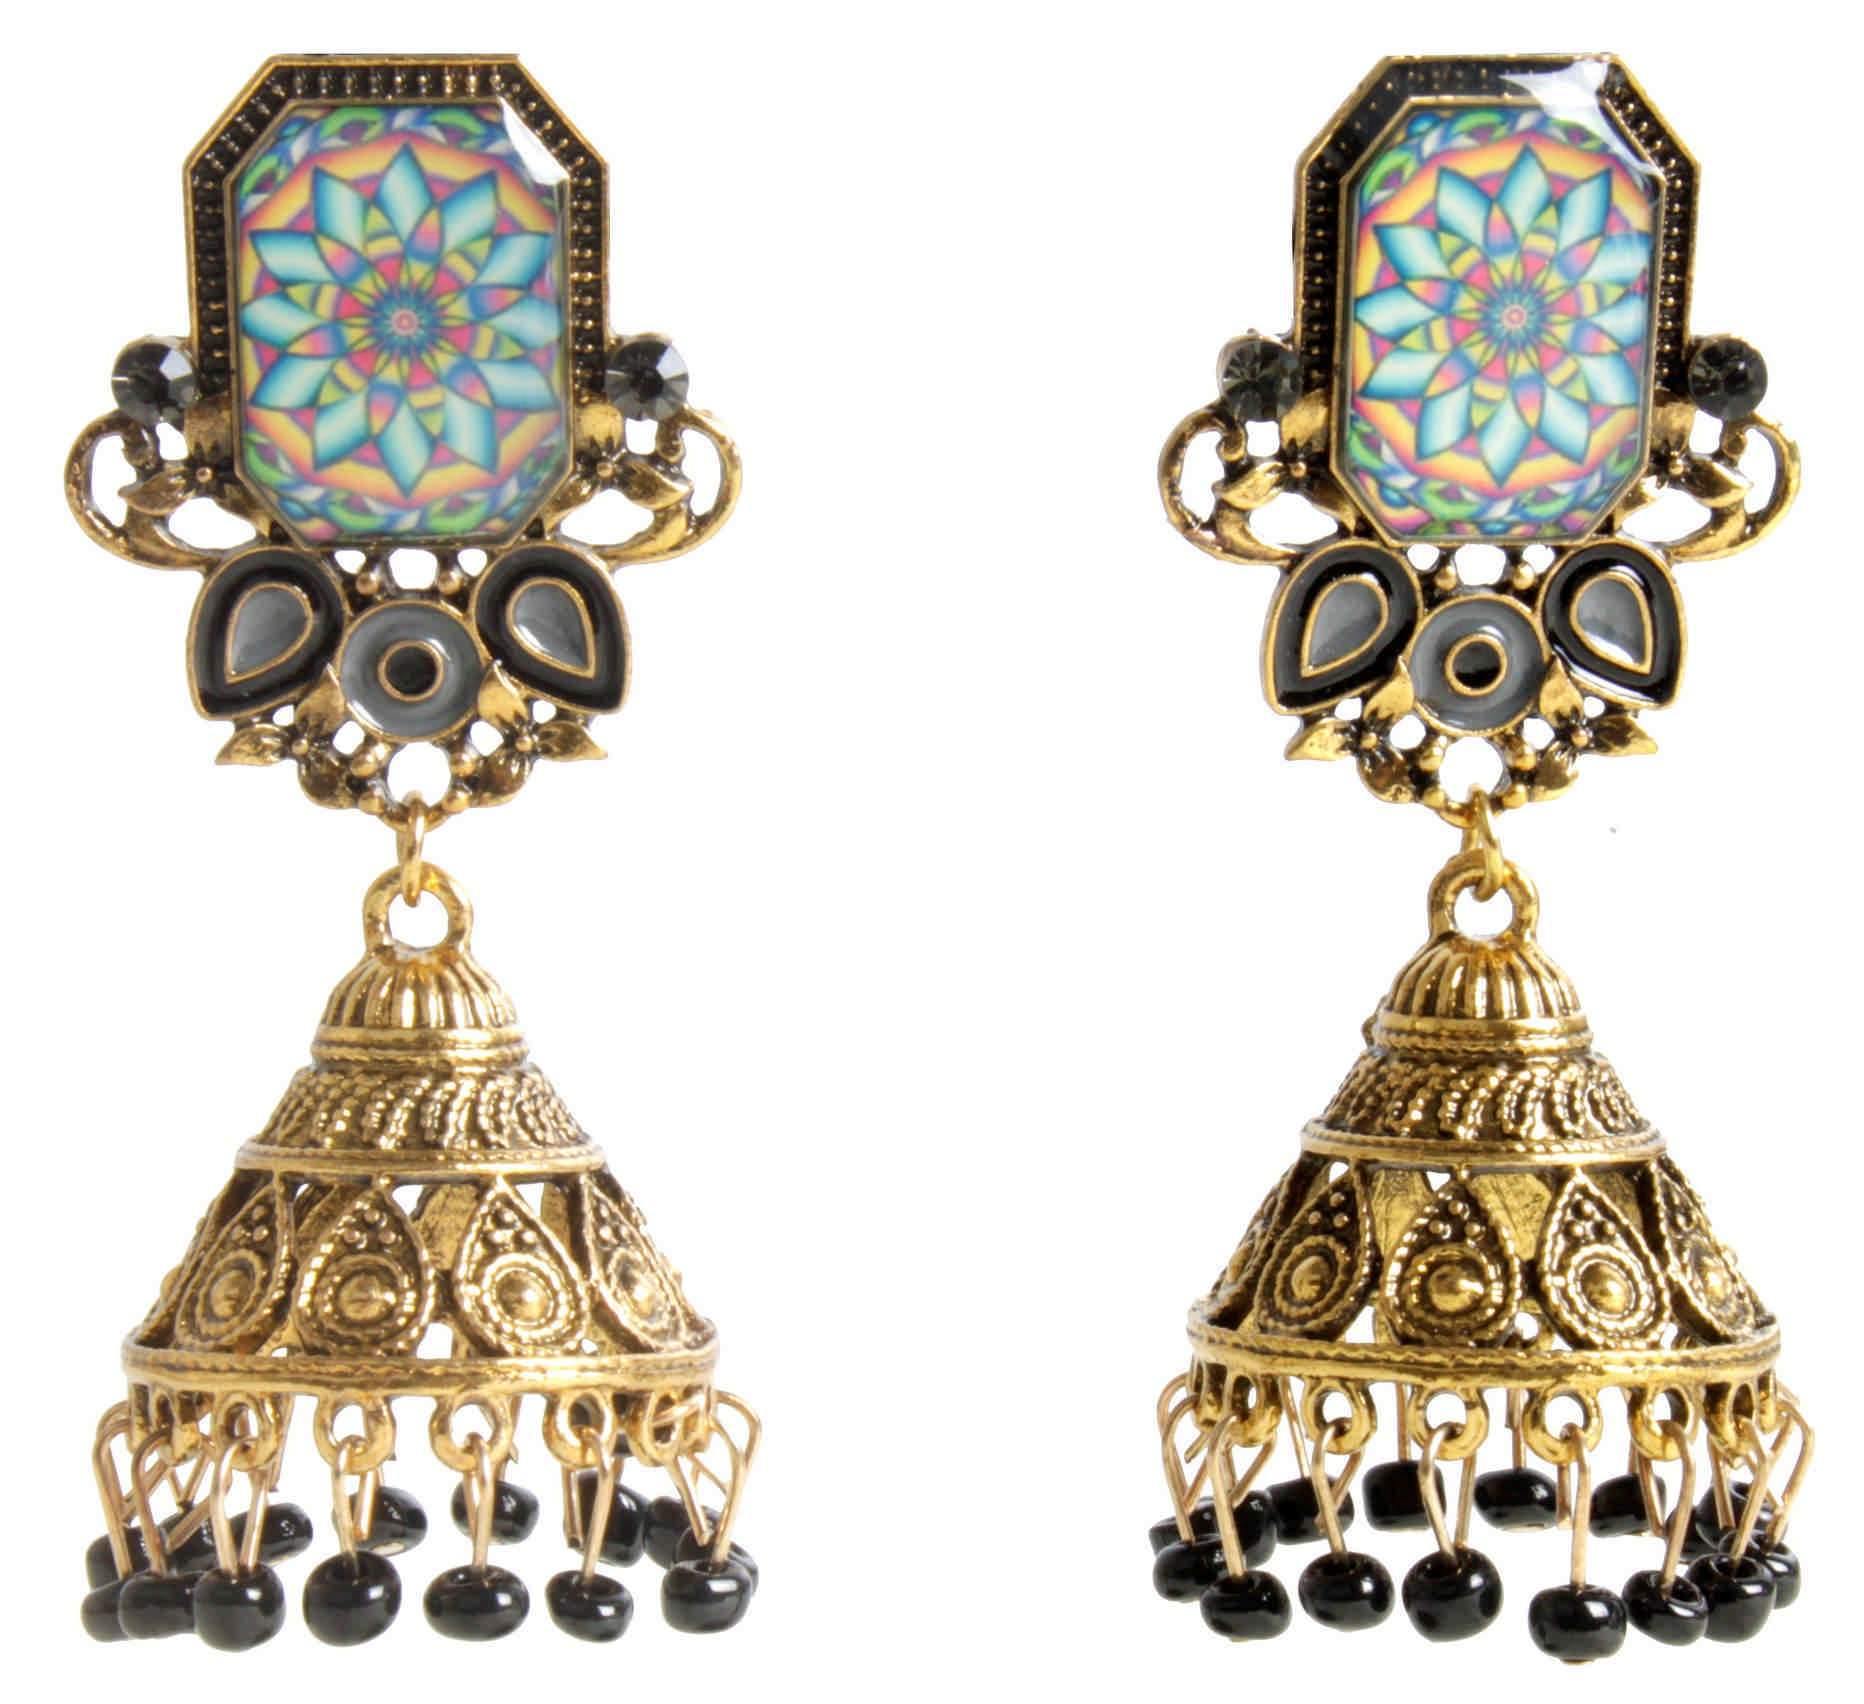 Rajputi Style Stone Fashion Gold Artificial Fashion Dangler Jhumka Earrings with Drops for Girls Women - Indian Petals